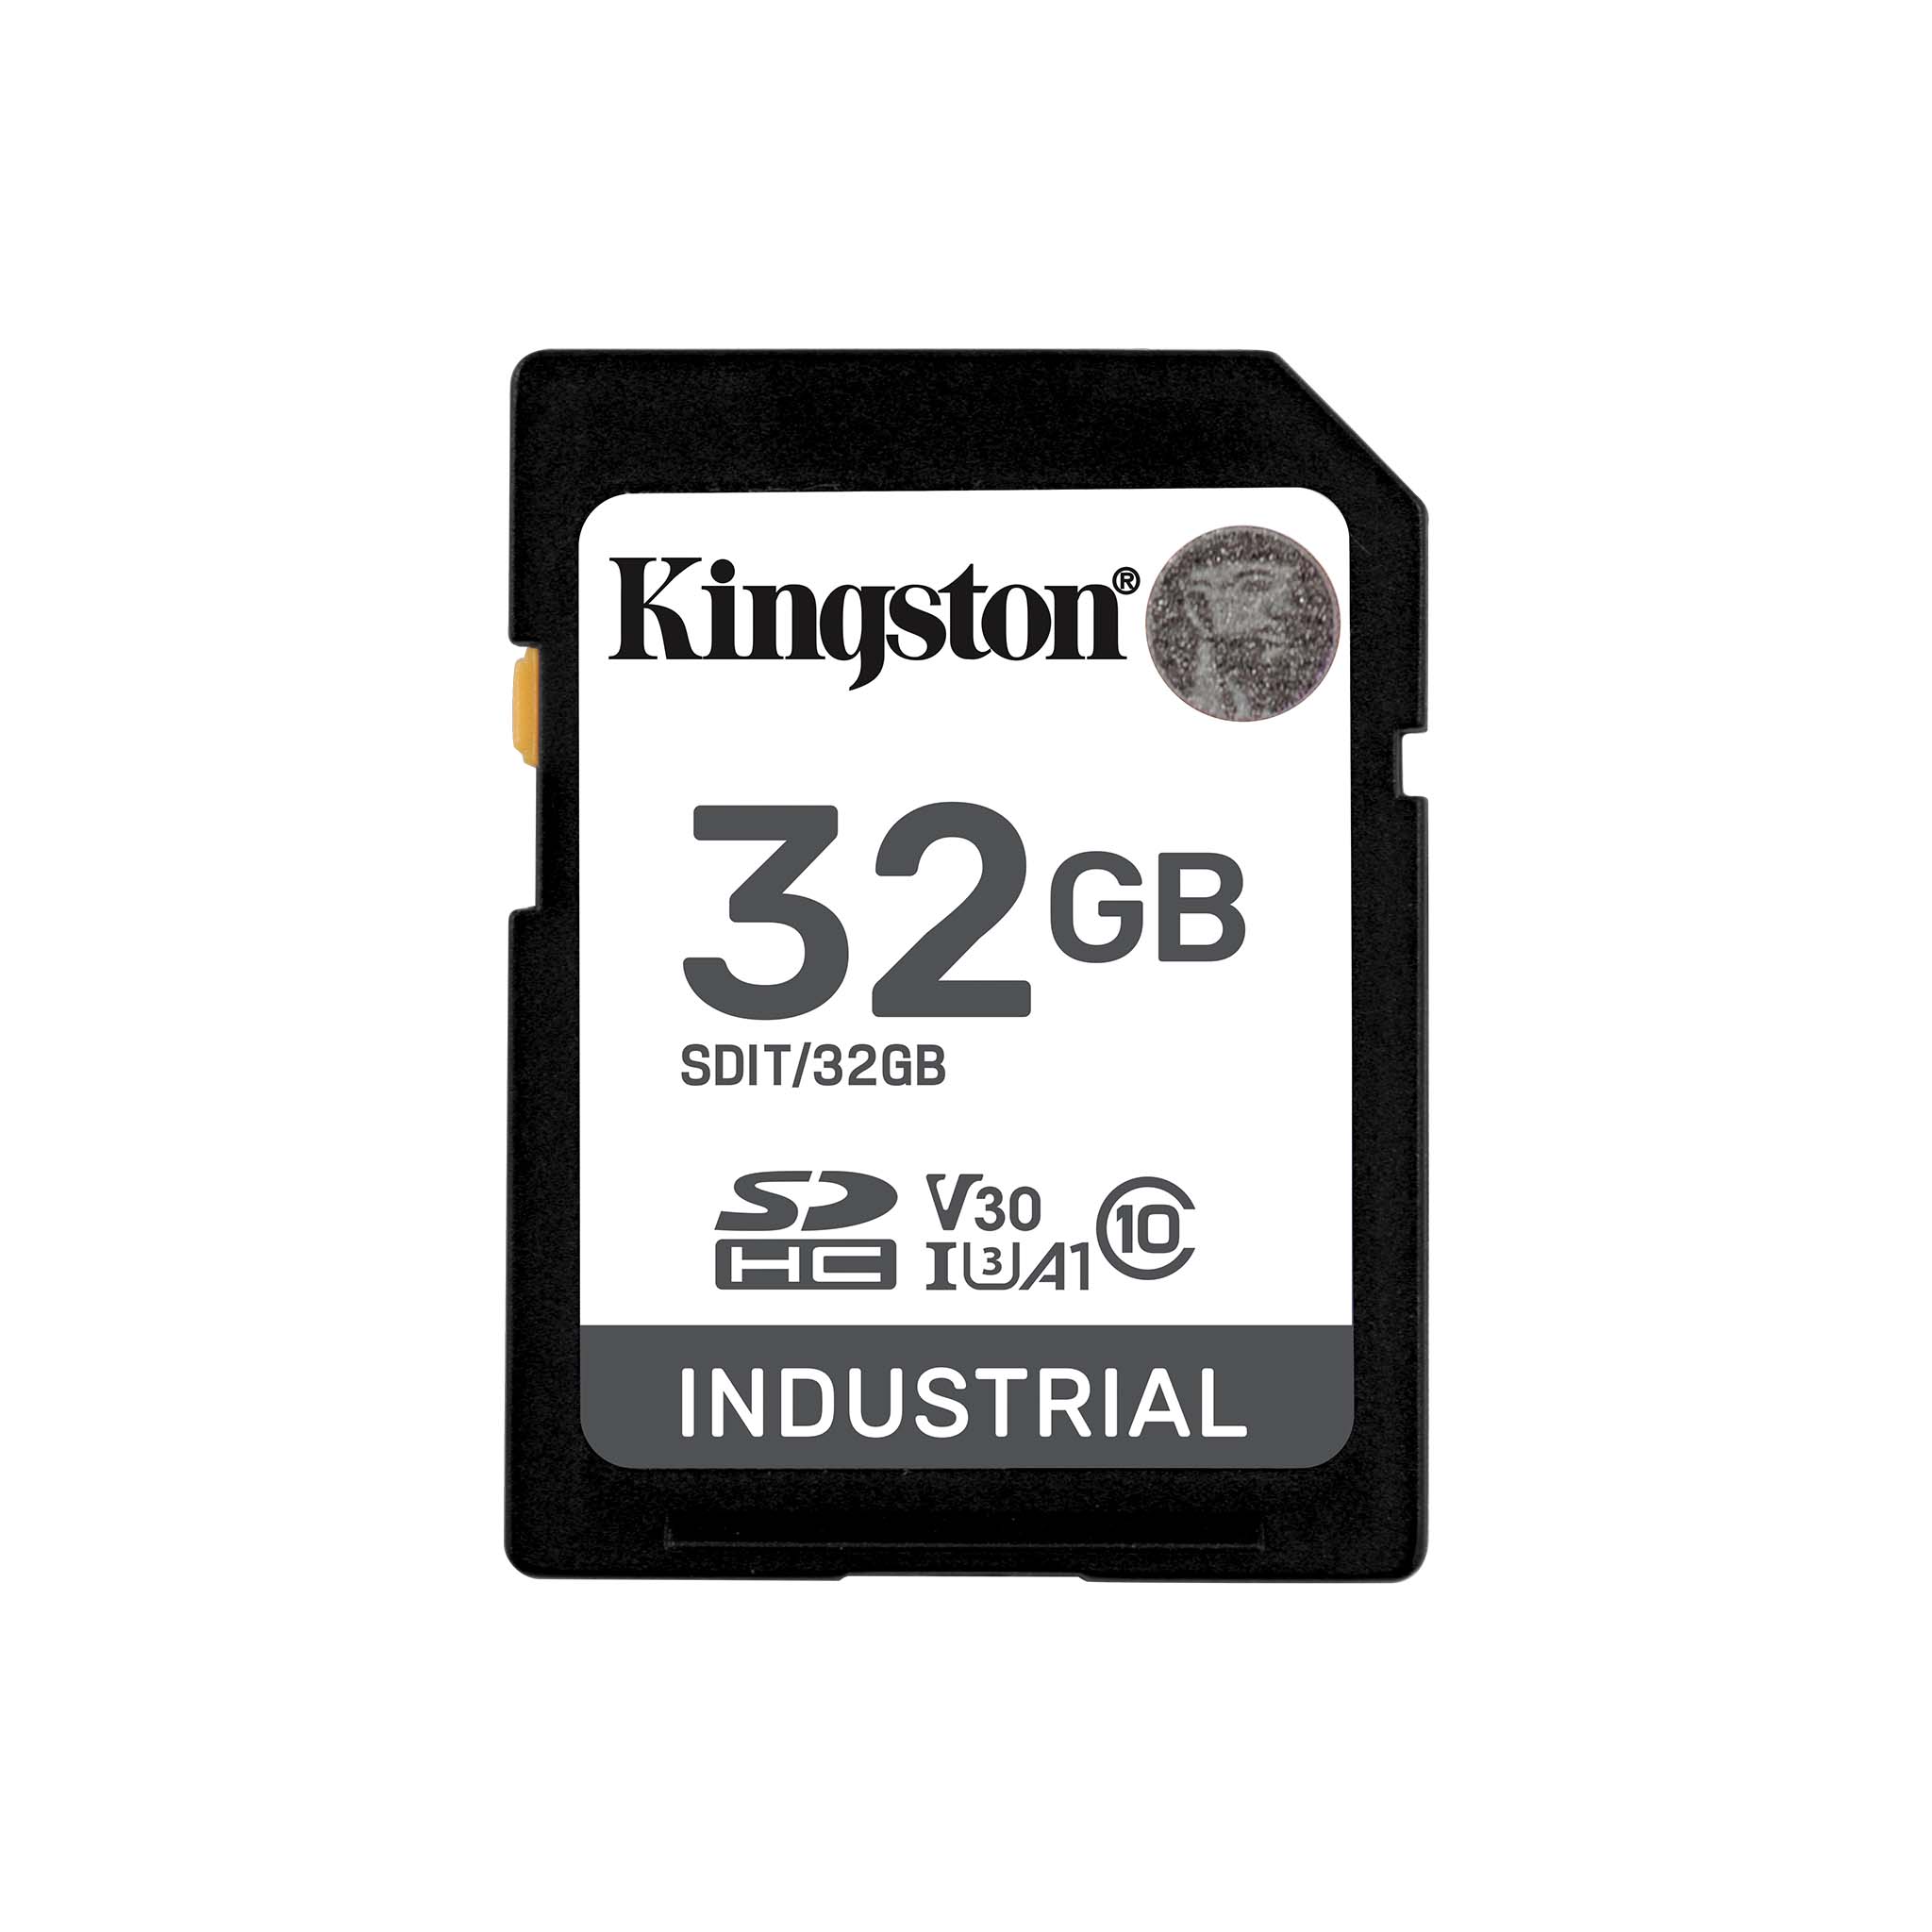 Kingston Industrial/SDHC/32GB/UHS-I U3 / Class 10